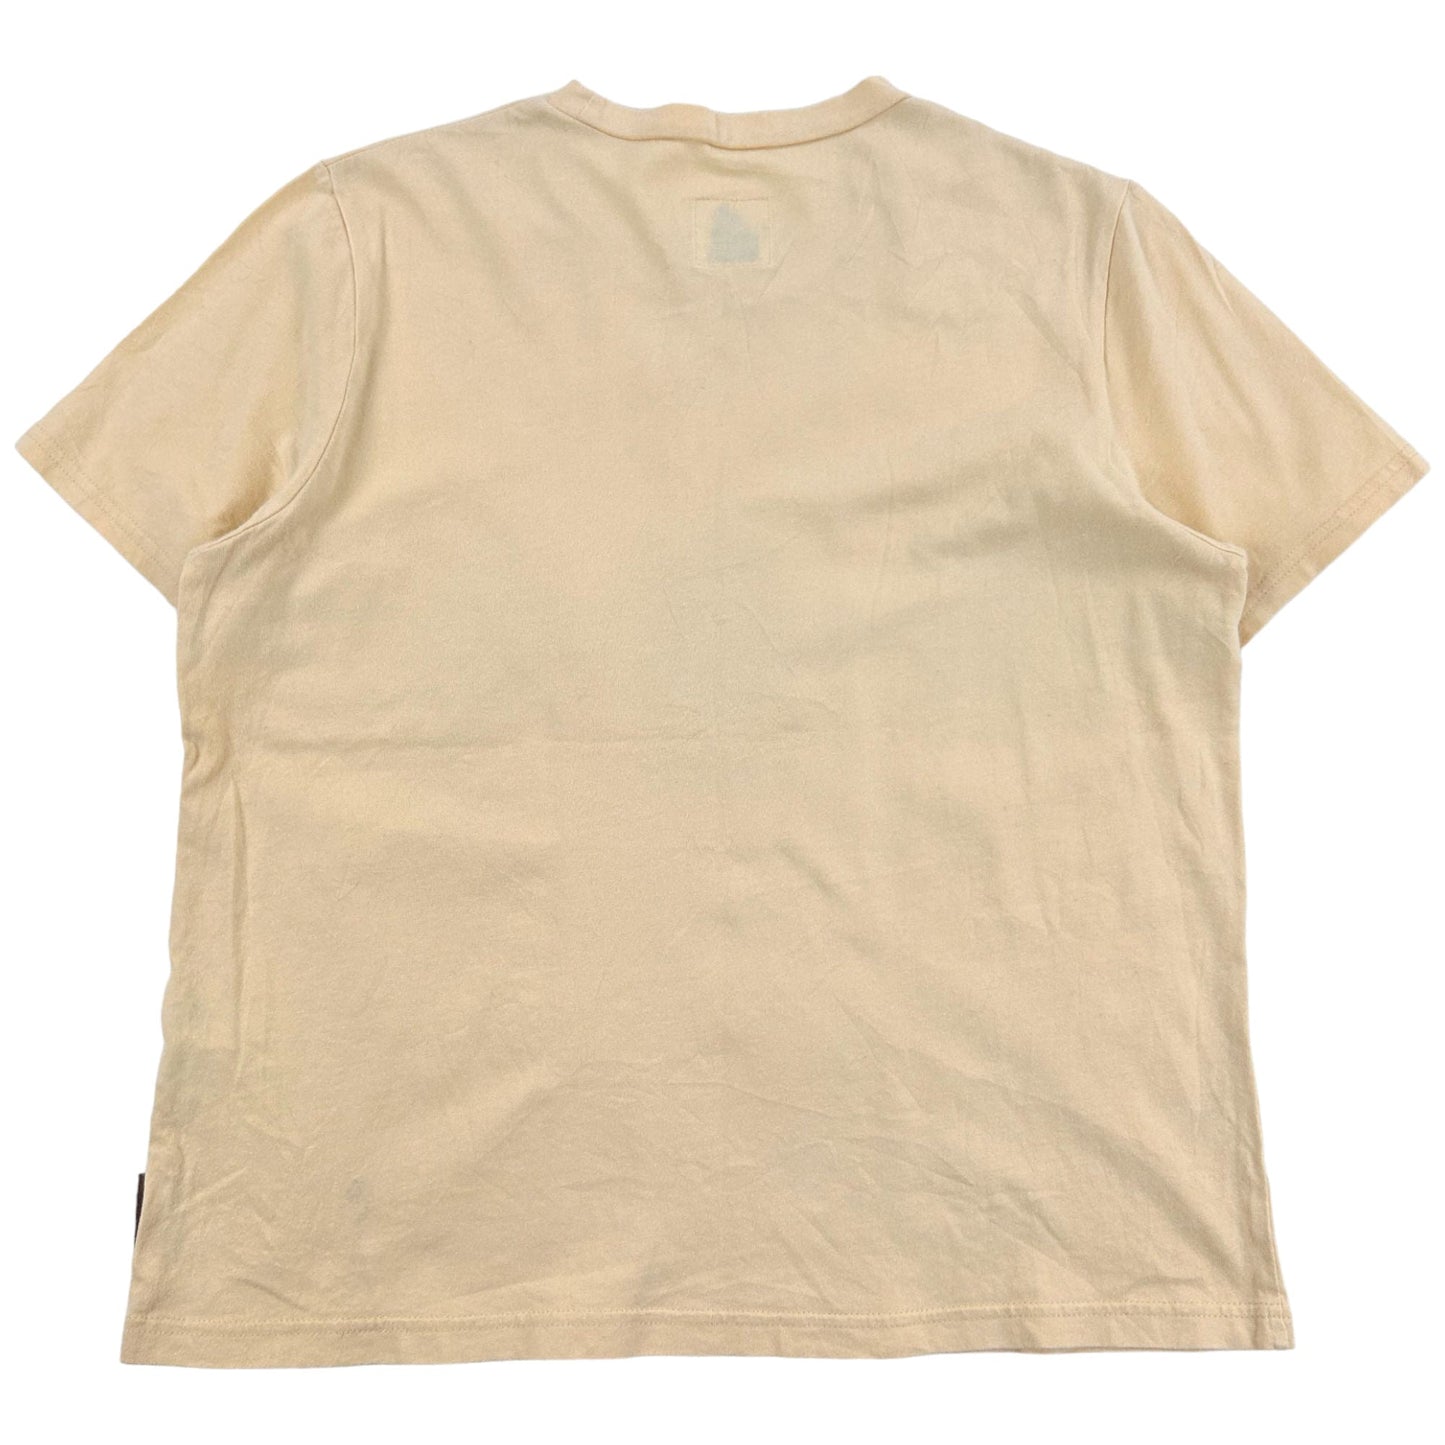 Vintage Hai By Issey Miyake T-Shirt Size XS